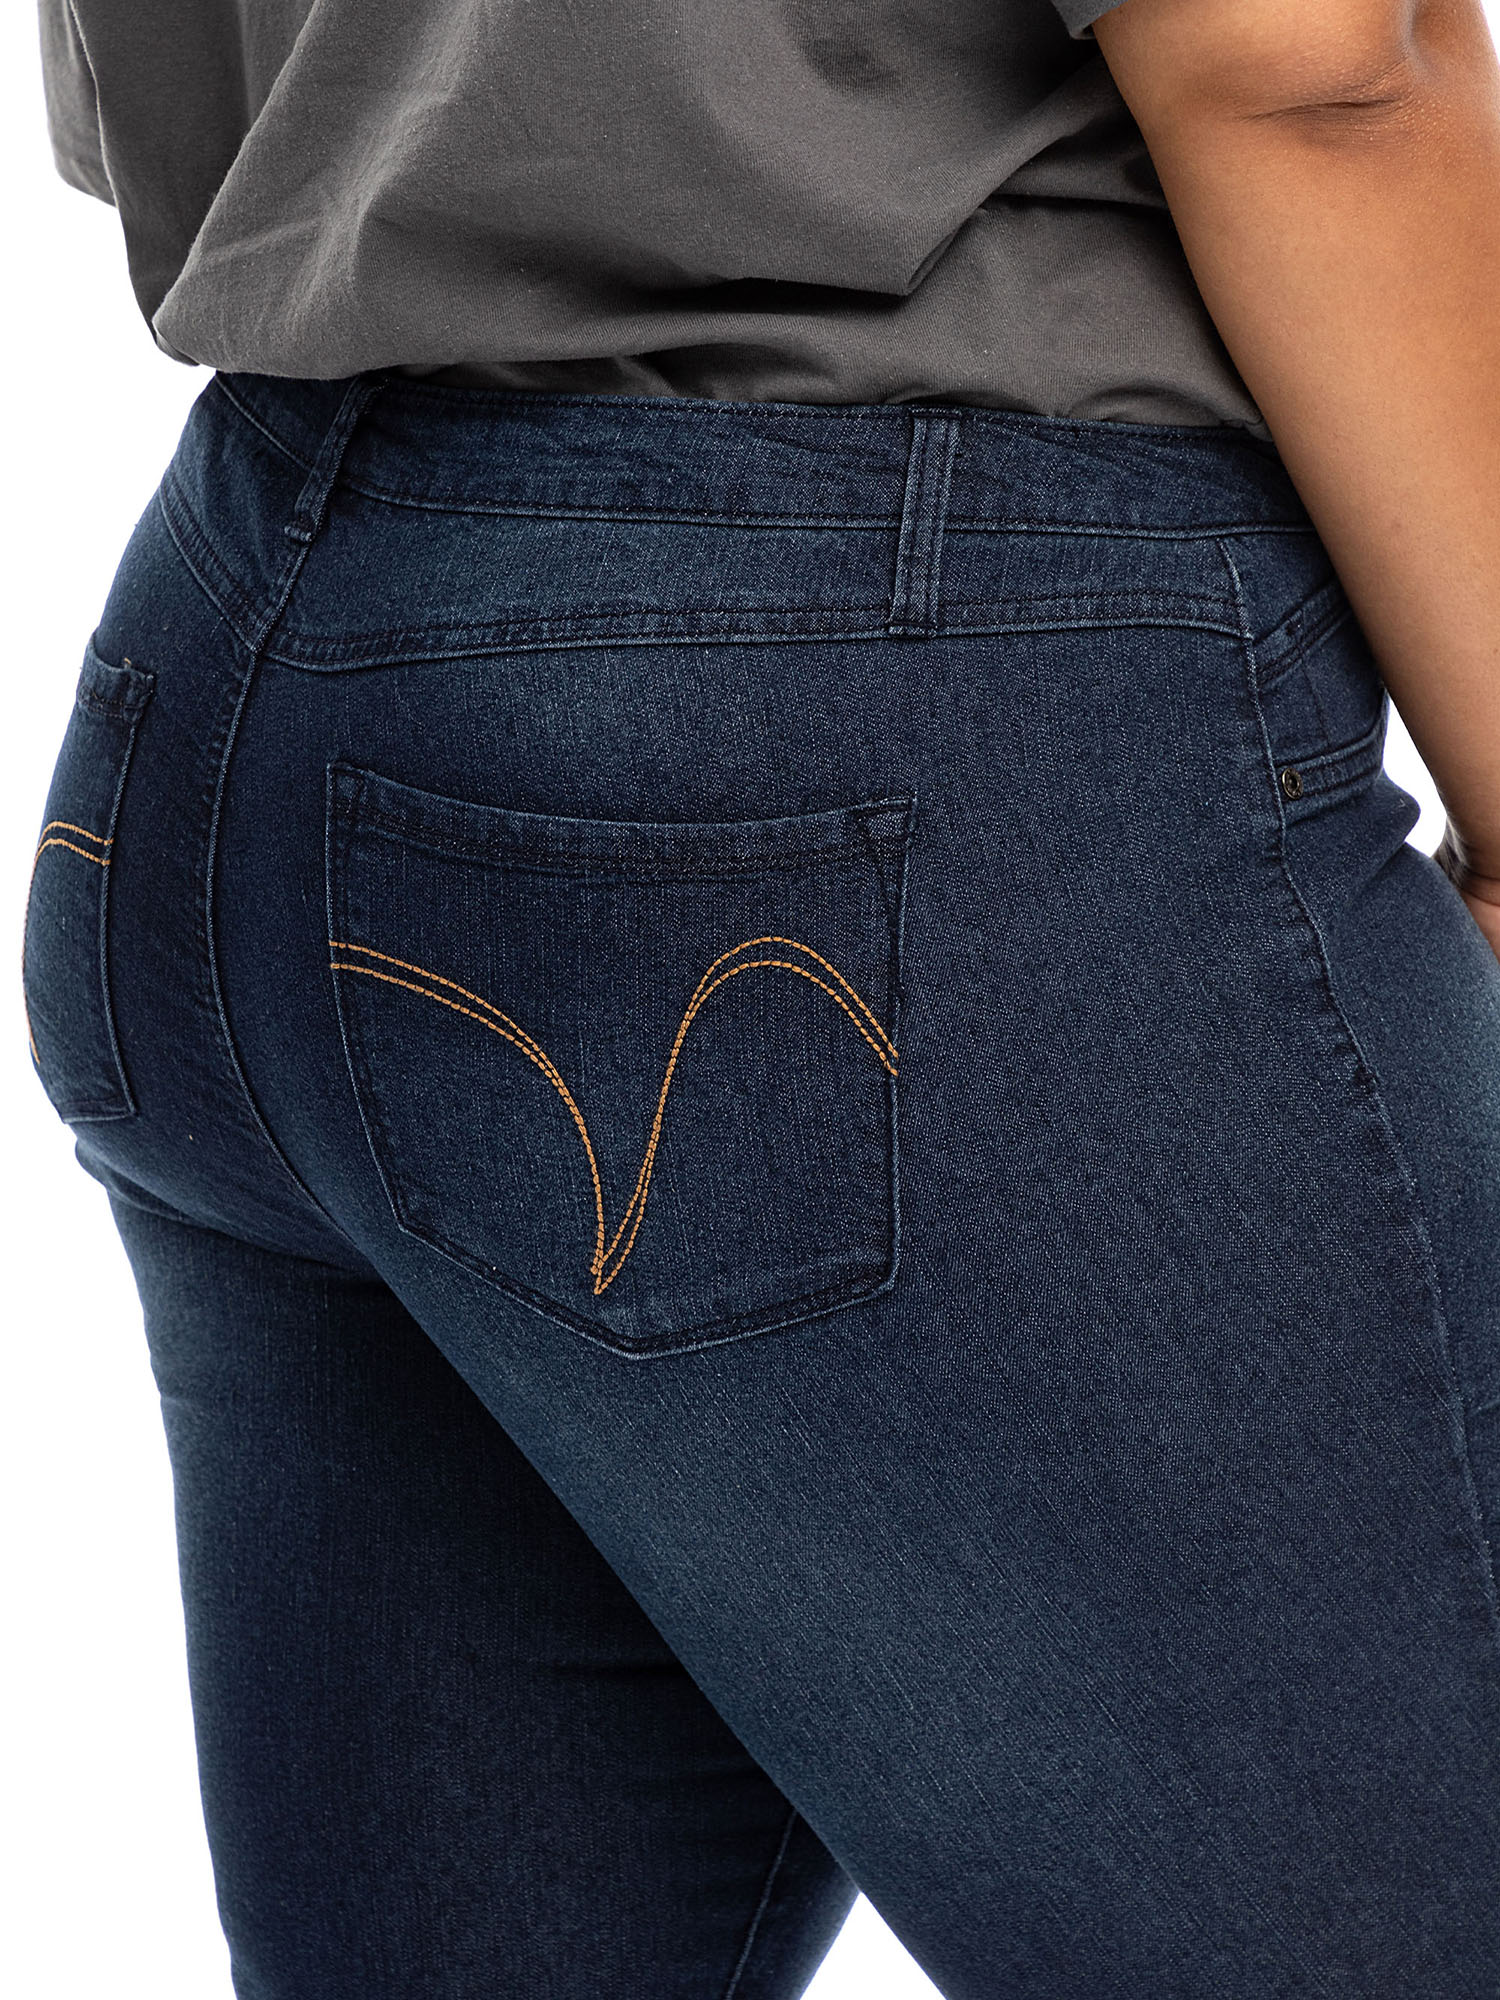 A3 Denim Women's Plus Size Stretch Denim Overalls with Cuffs - Walmart.com